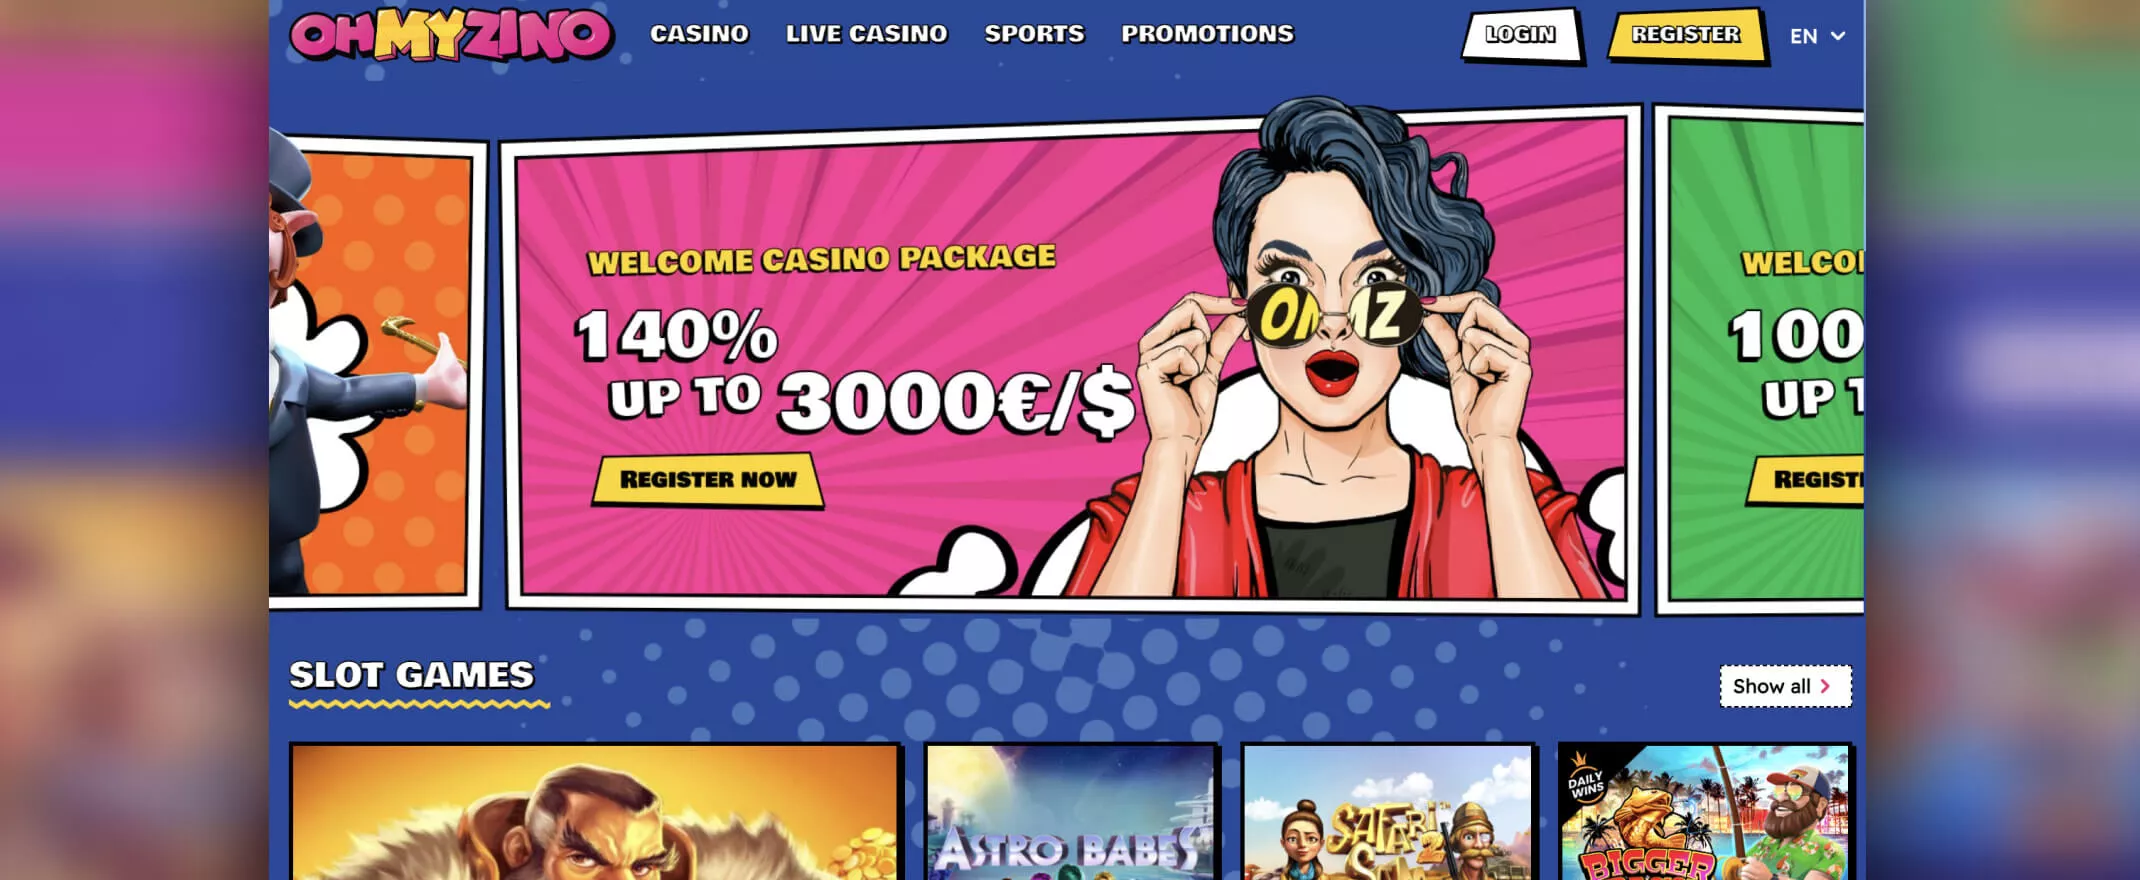 ohmyzino casino screenshot